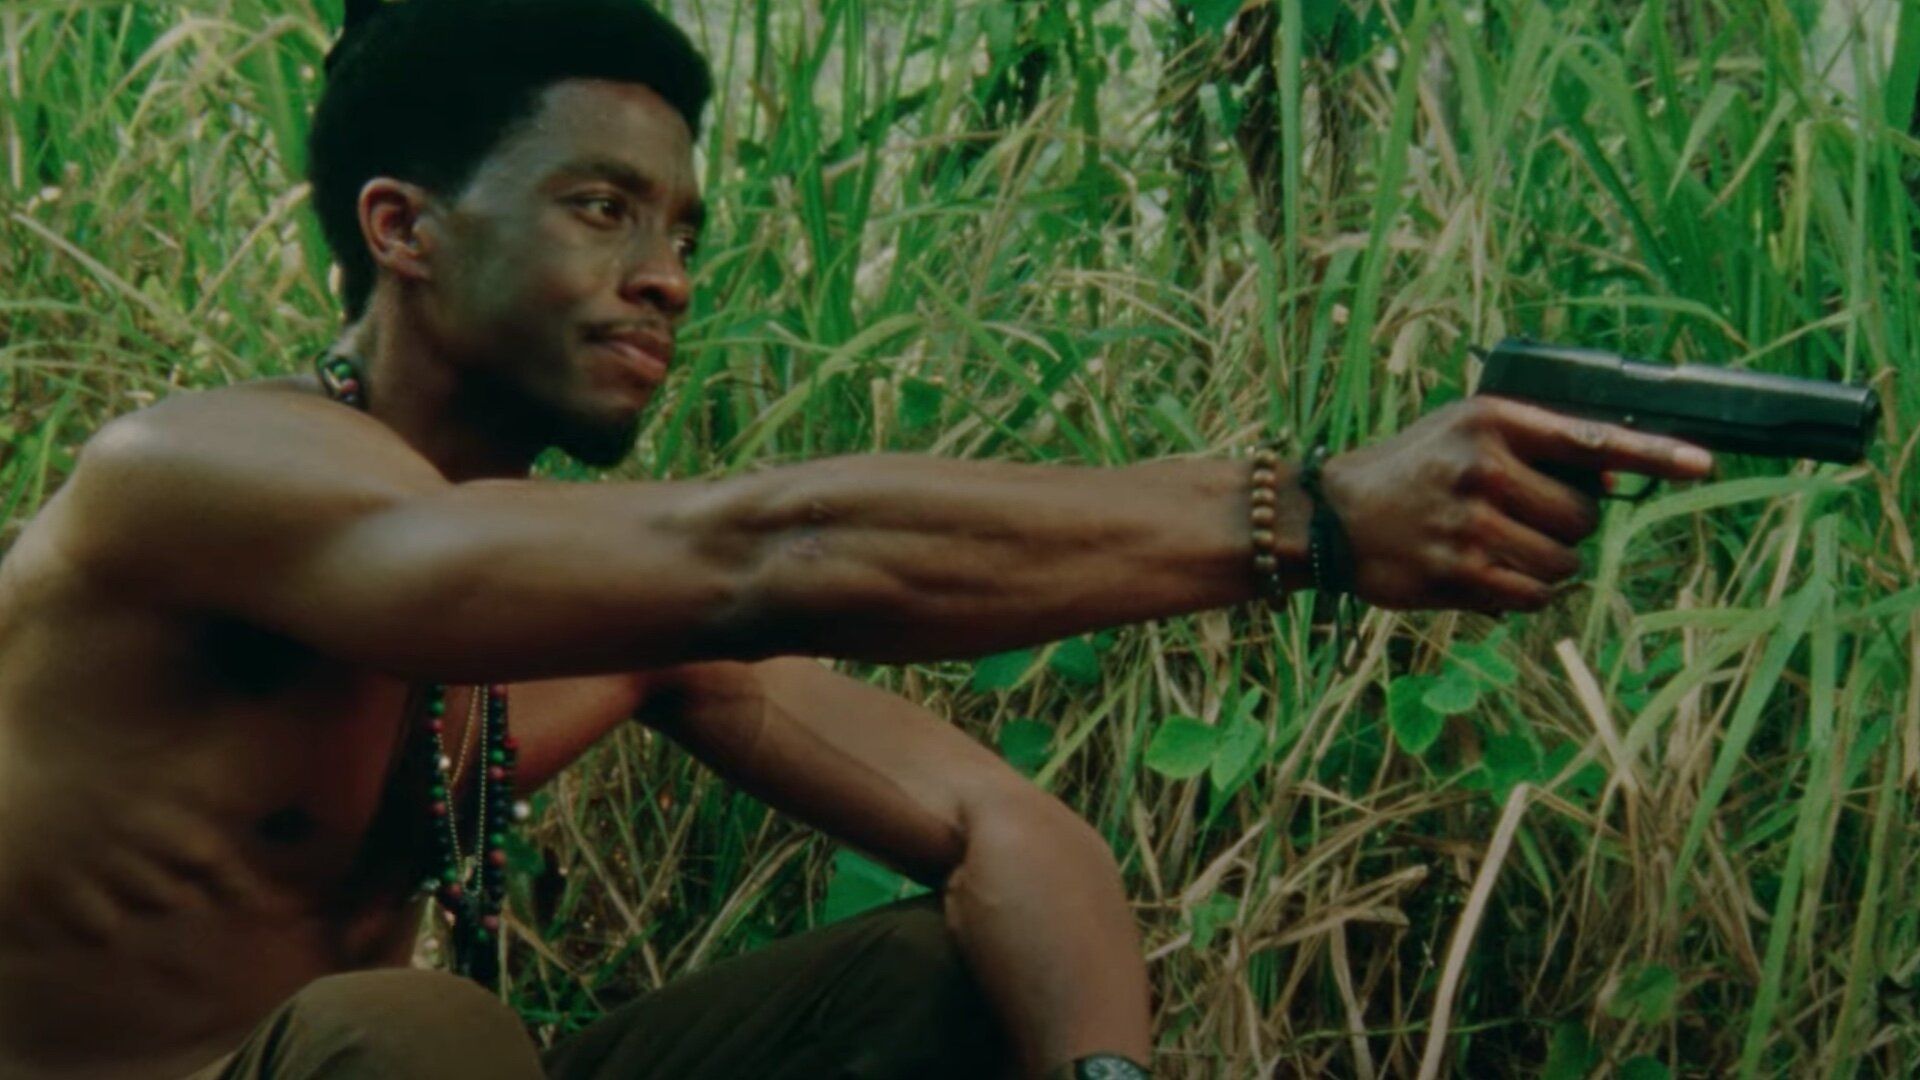 for Spike Lee's Vietnam War Vet Movie DA 5 BLOODS